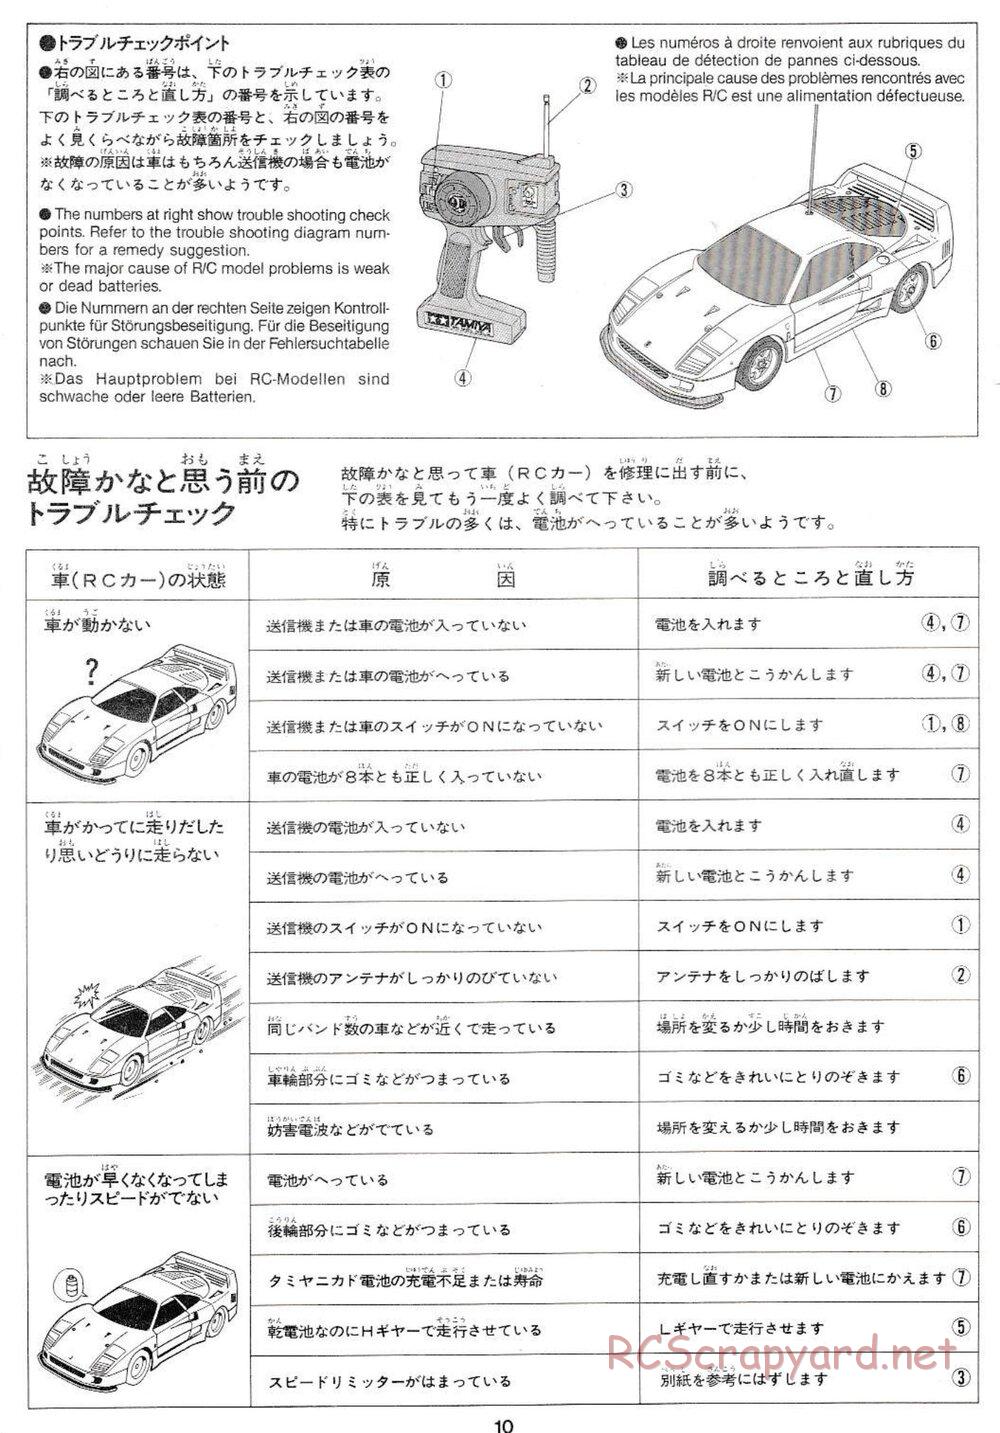 Tamiya - Ferrari F40 QD Chassis - Manual - Page 10